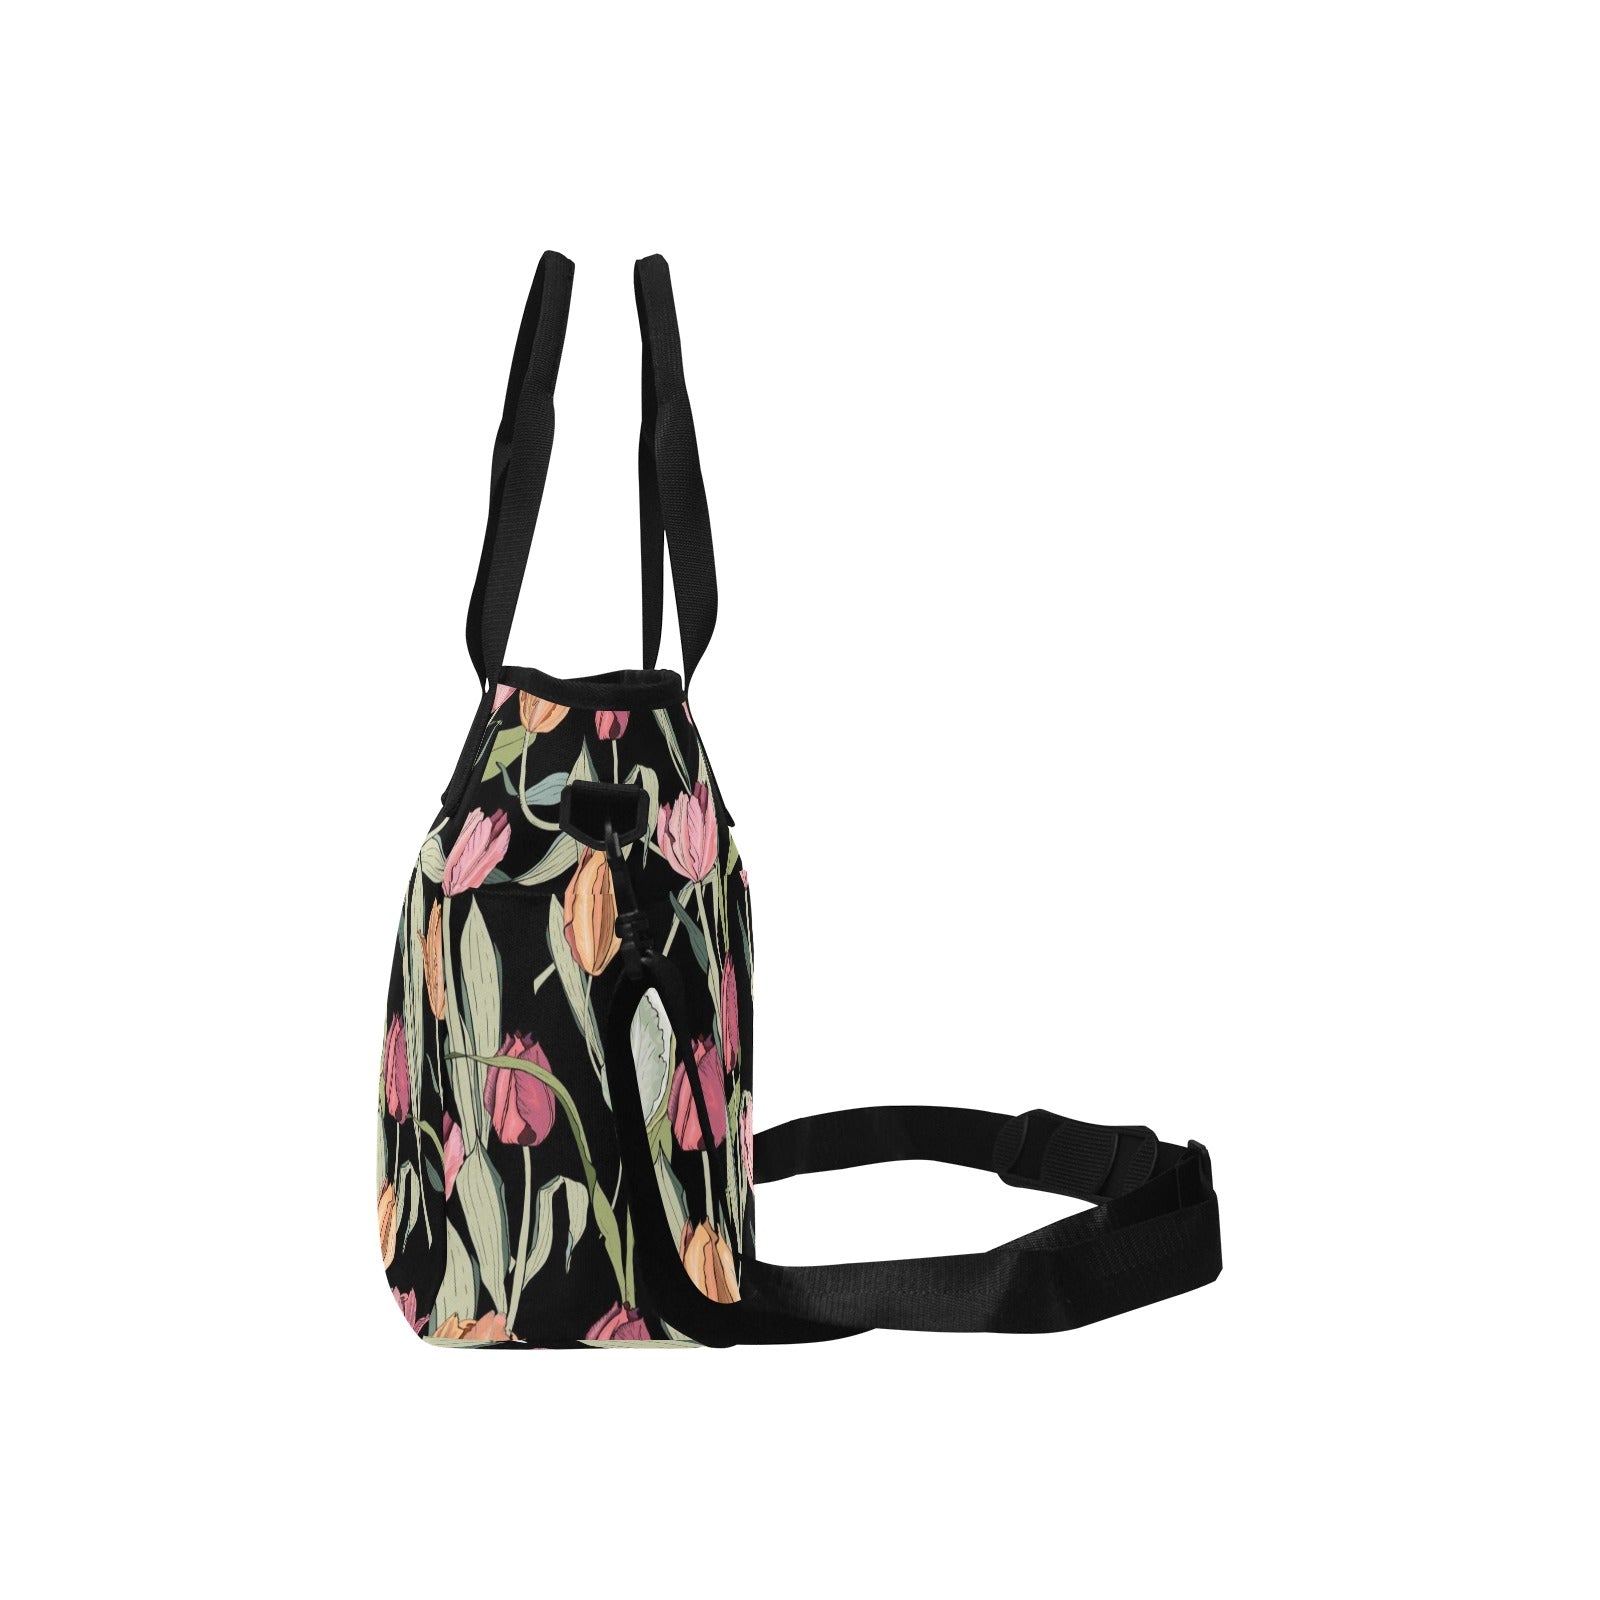 Tulips - Tote Bag with Shoulder Strap Nylon Tote Bag